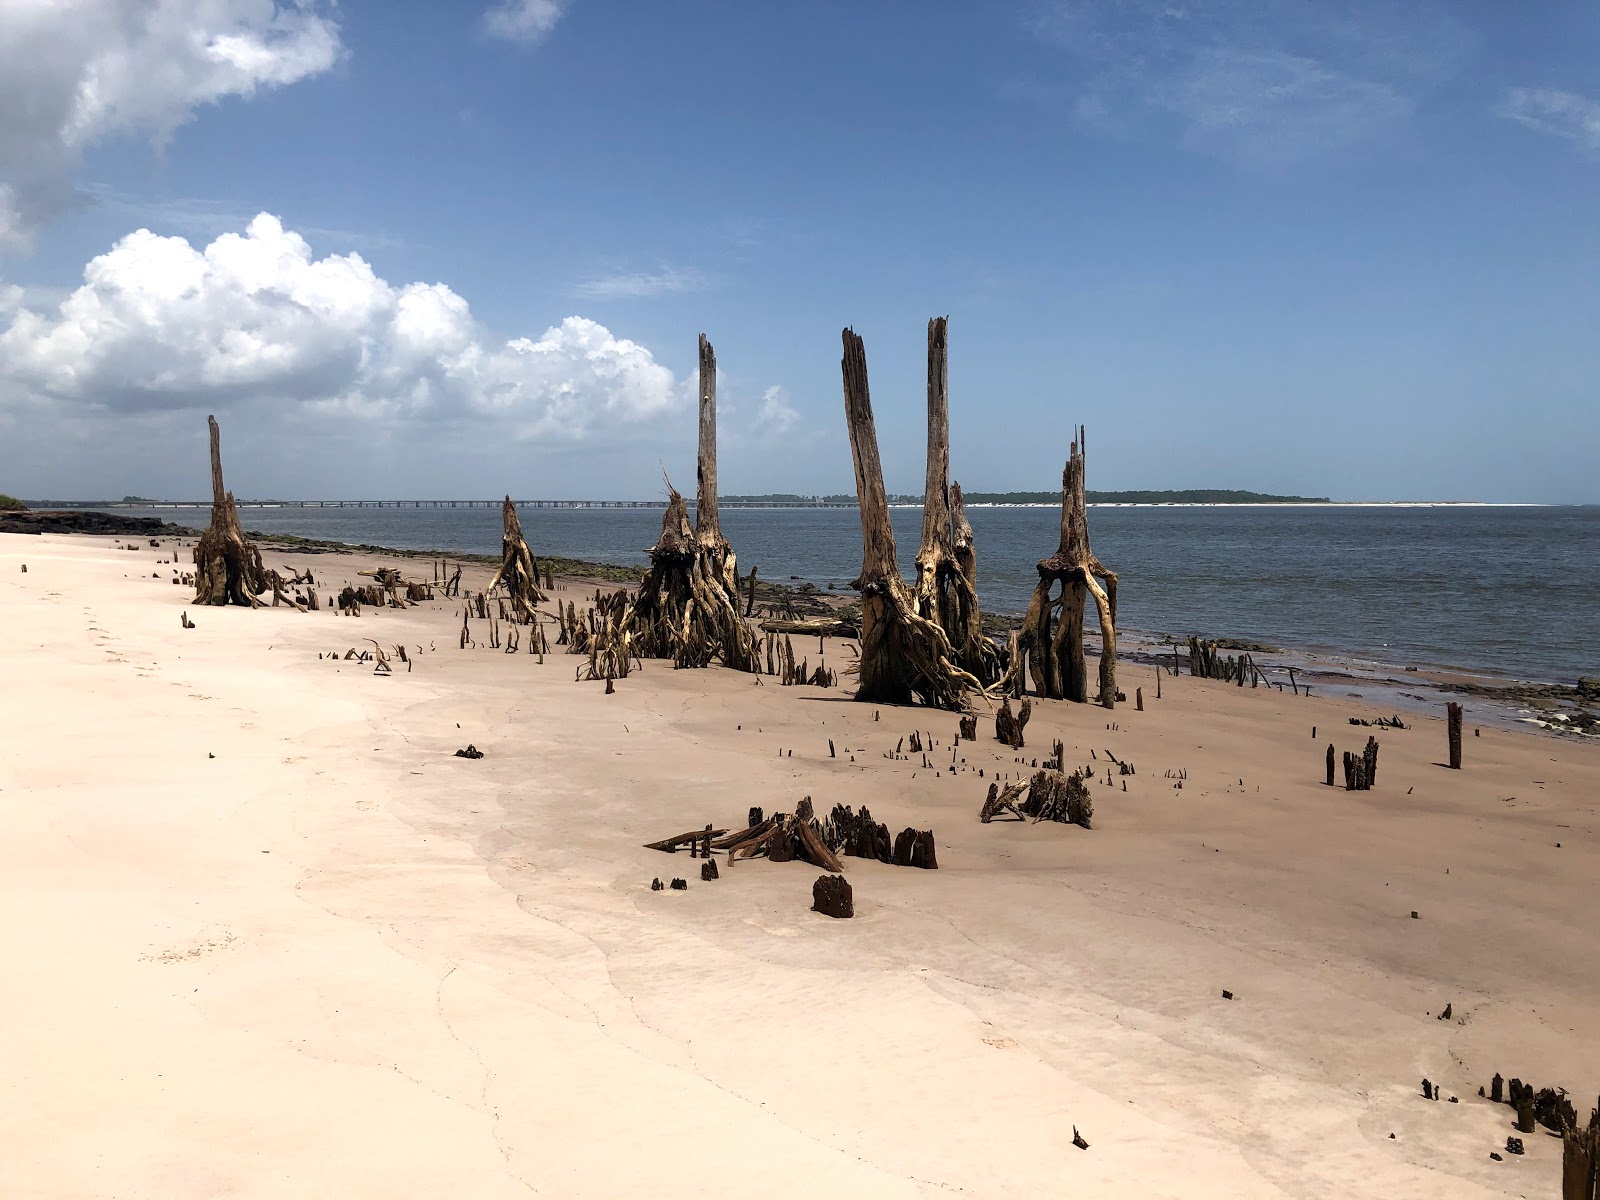 Fotografija Boneyard beach nahaja se v naravnem okolju